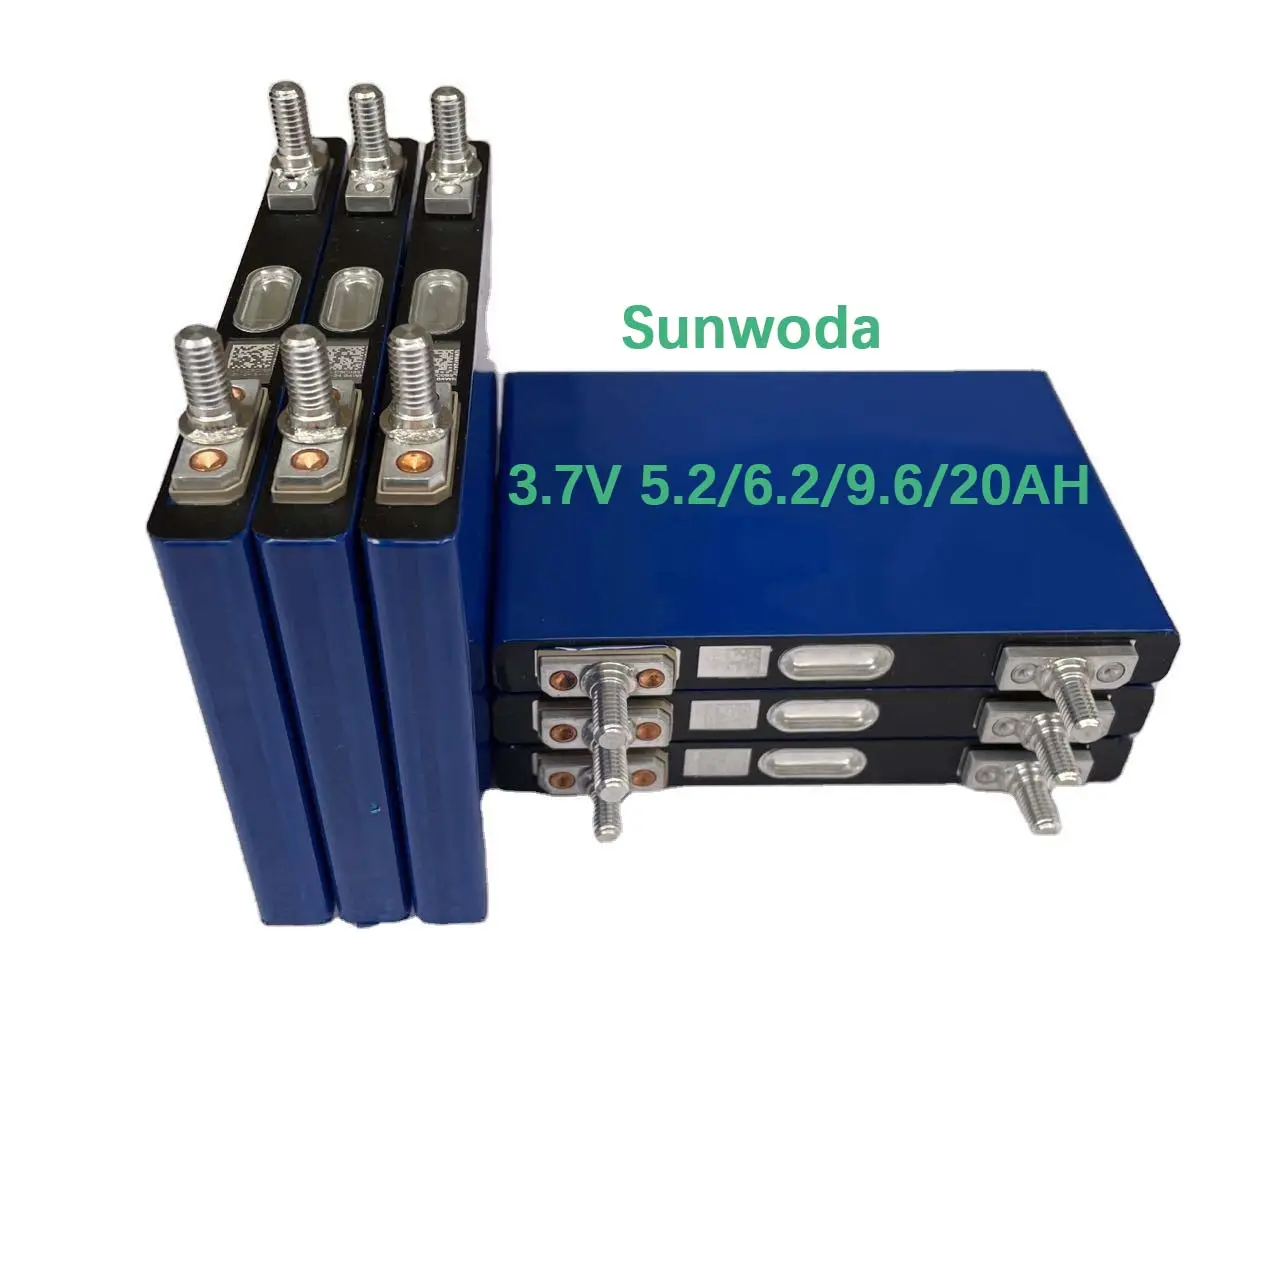 Batteria al litio Sunwoda ricaricabile CATL 3.7V 5.2AH 9.6AH 20AH NMC per auto Audio ad alta velocità 3.7V 6.9Ah celle